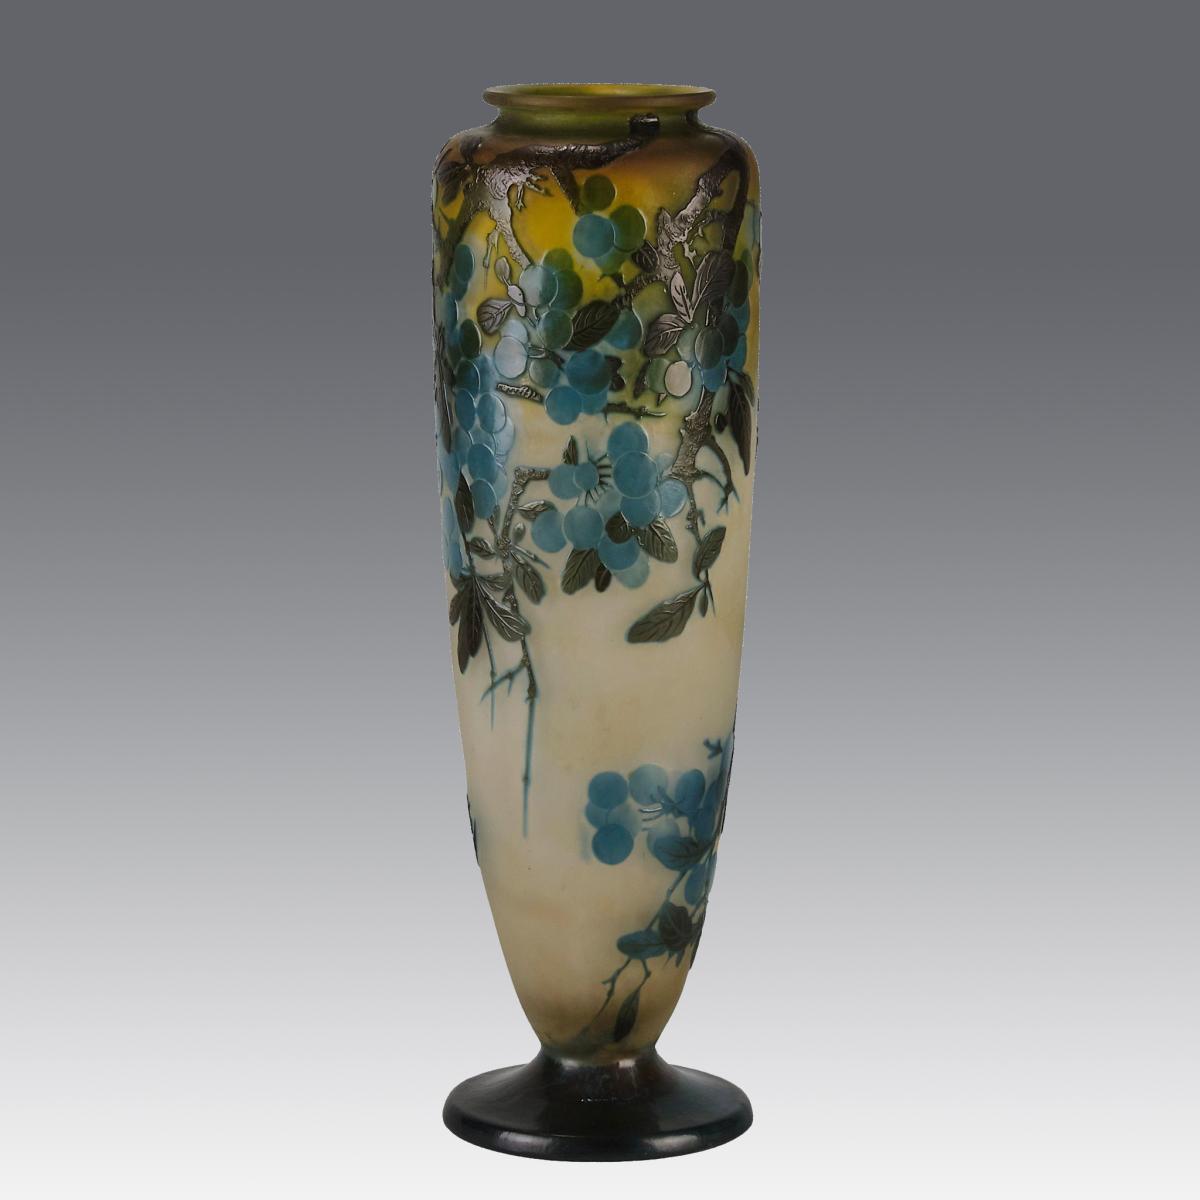 Early 20th Century Art Nouveau Vase entitled "Fruiting Sloe Berries" by Emile Gallé